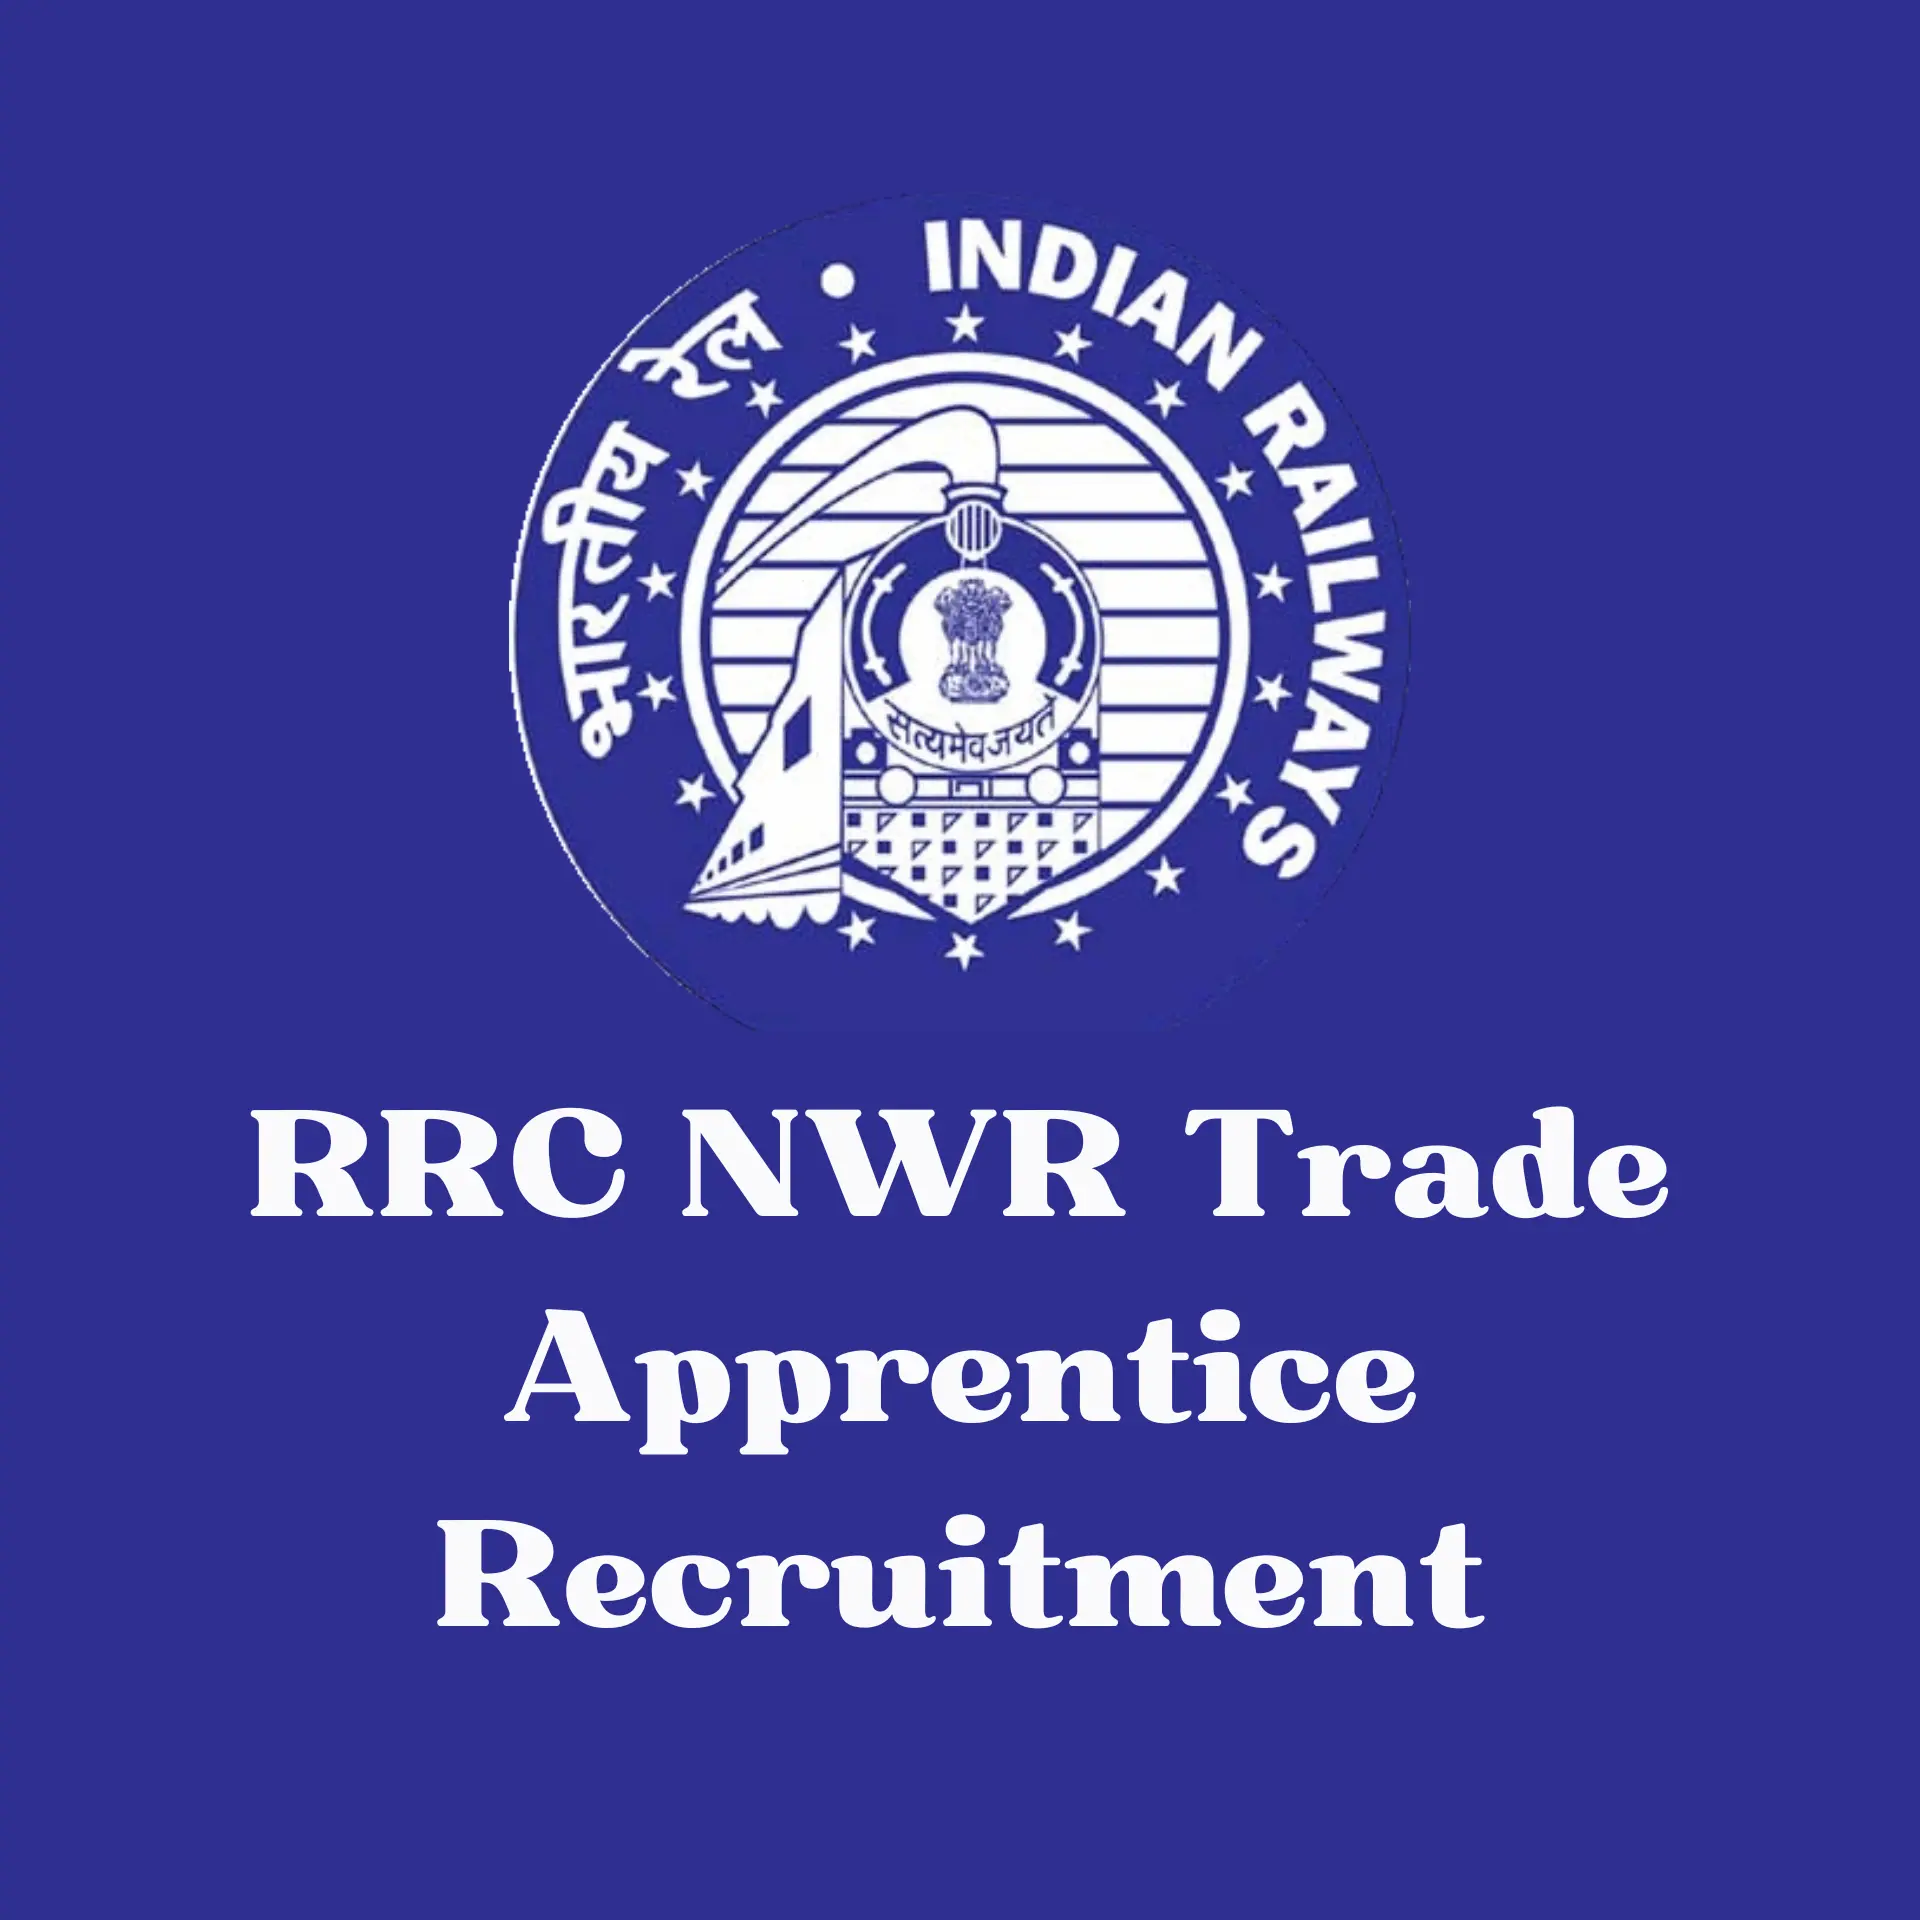 RRC NWR Trade Apprentice Recruitment